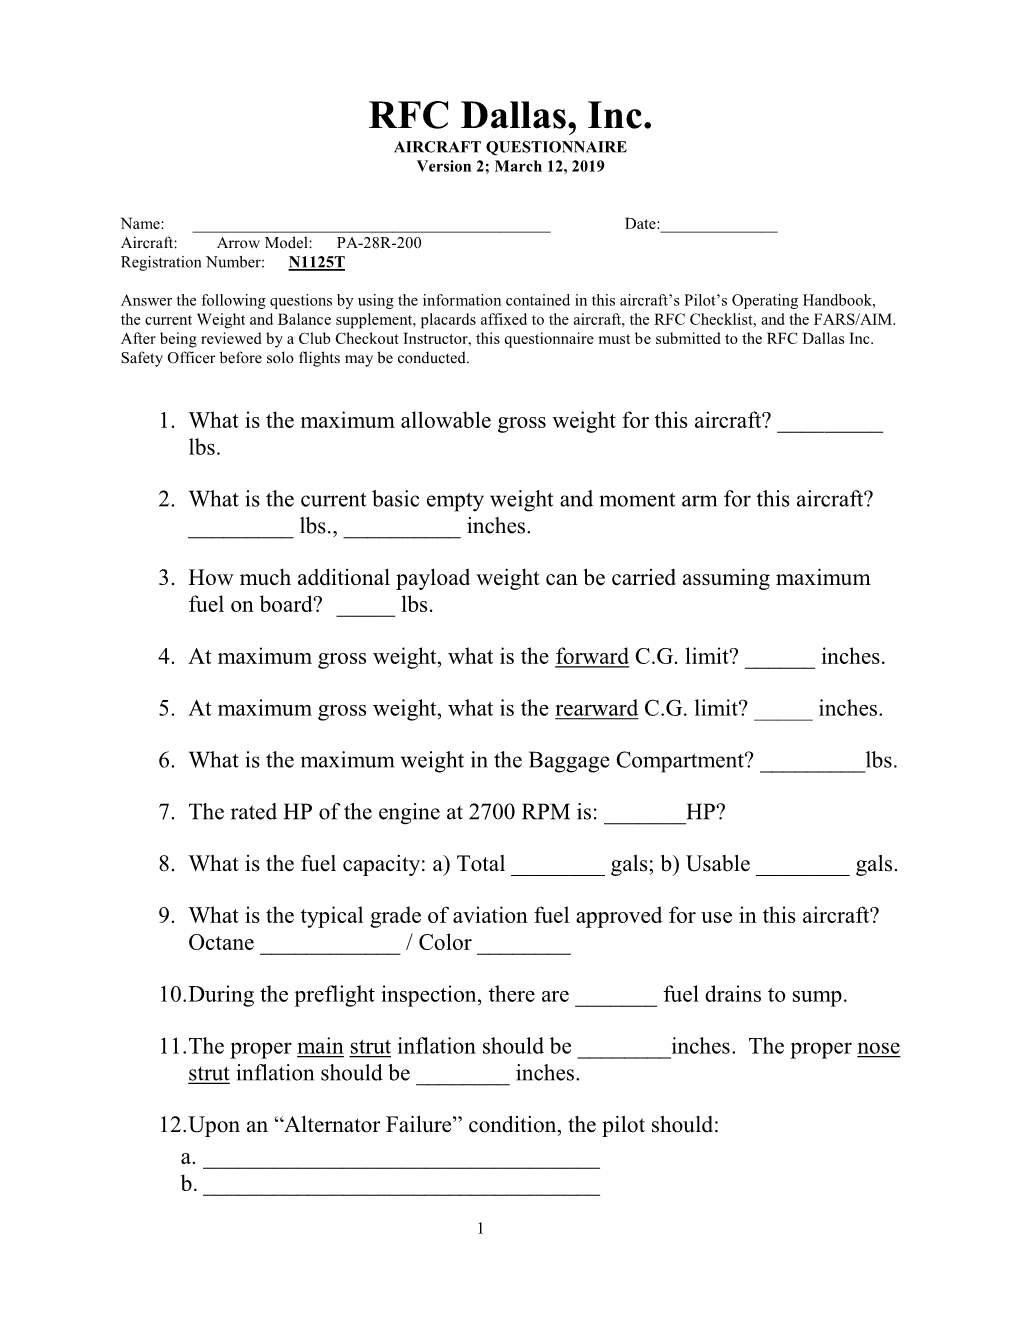 Piper Arrow Questionnaire